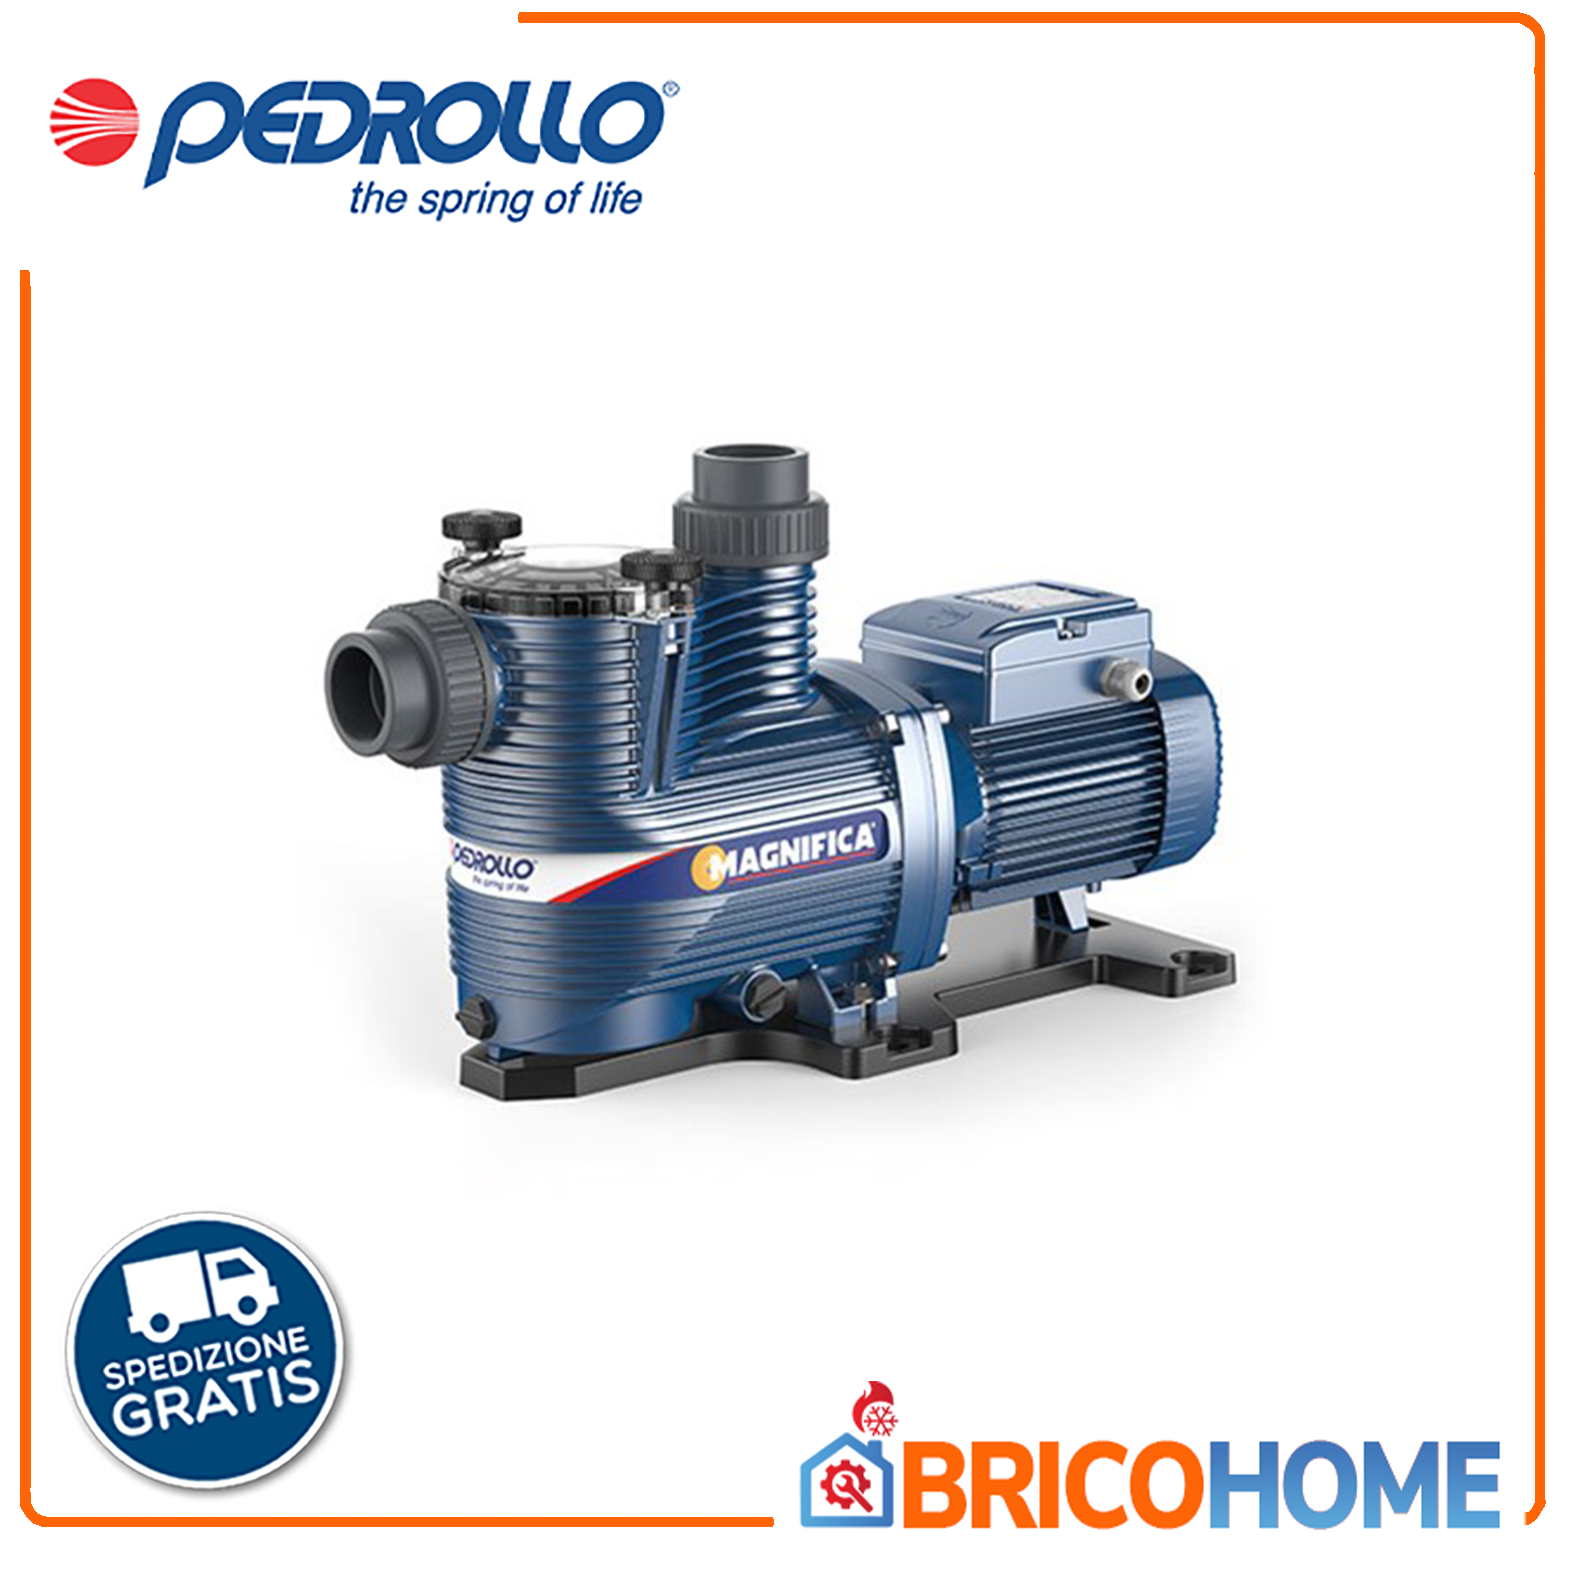 Electric pump for pools MAGNIFICA 1m Pedrollo